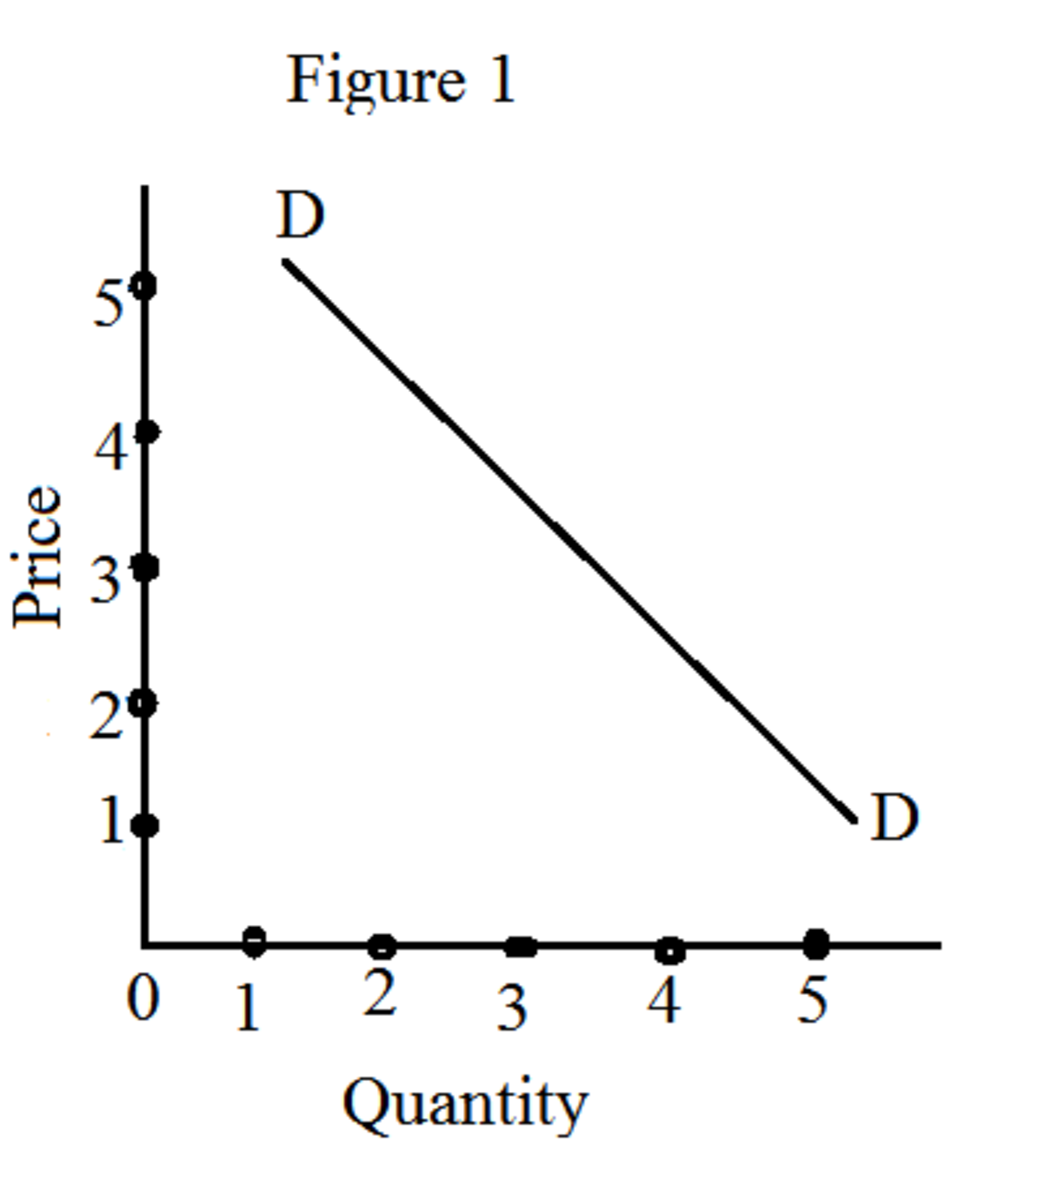 demand-schedule-and-demand-curve